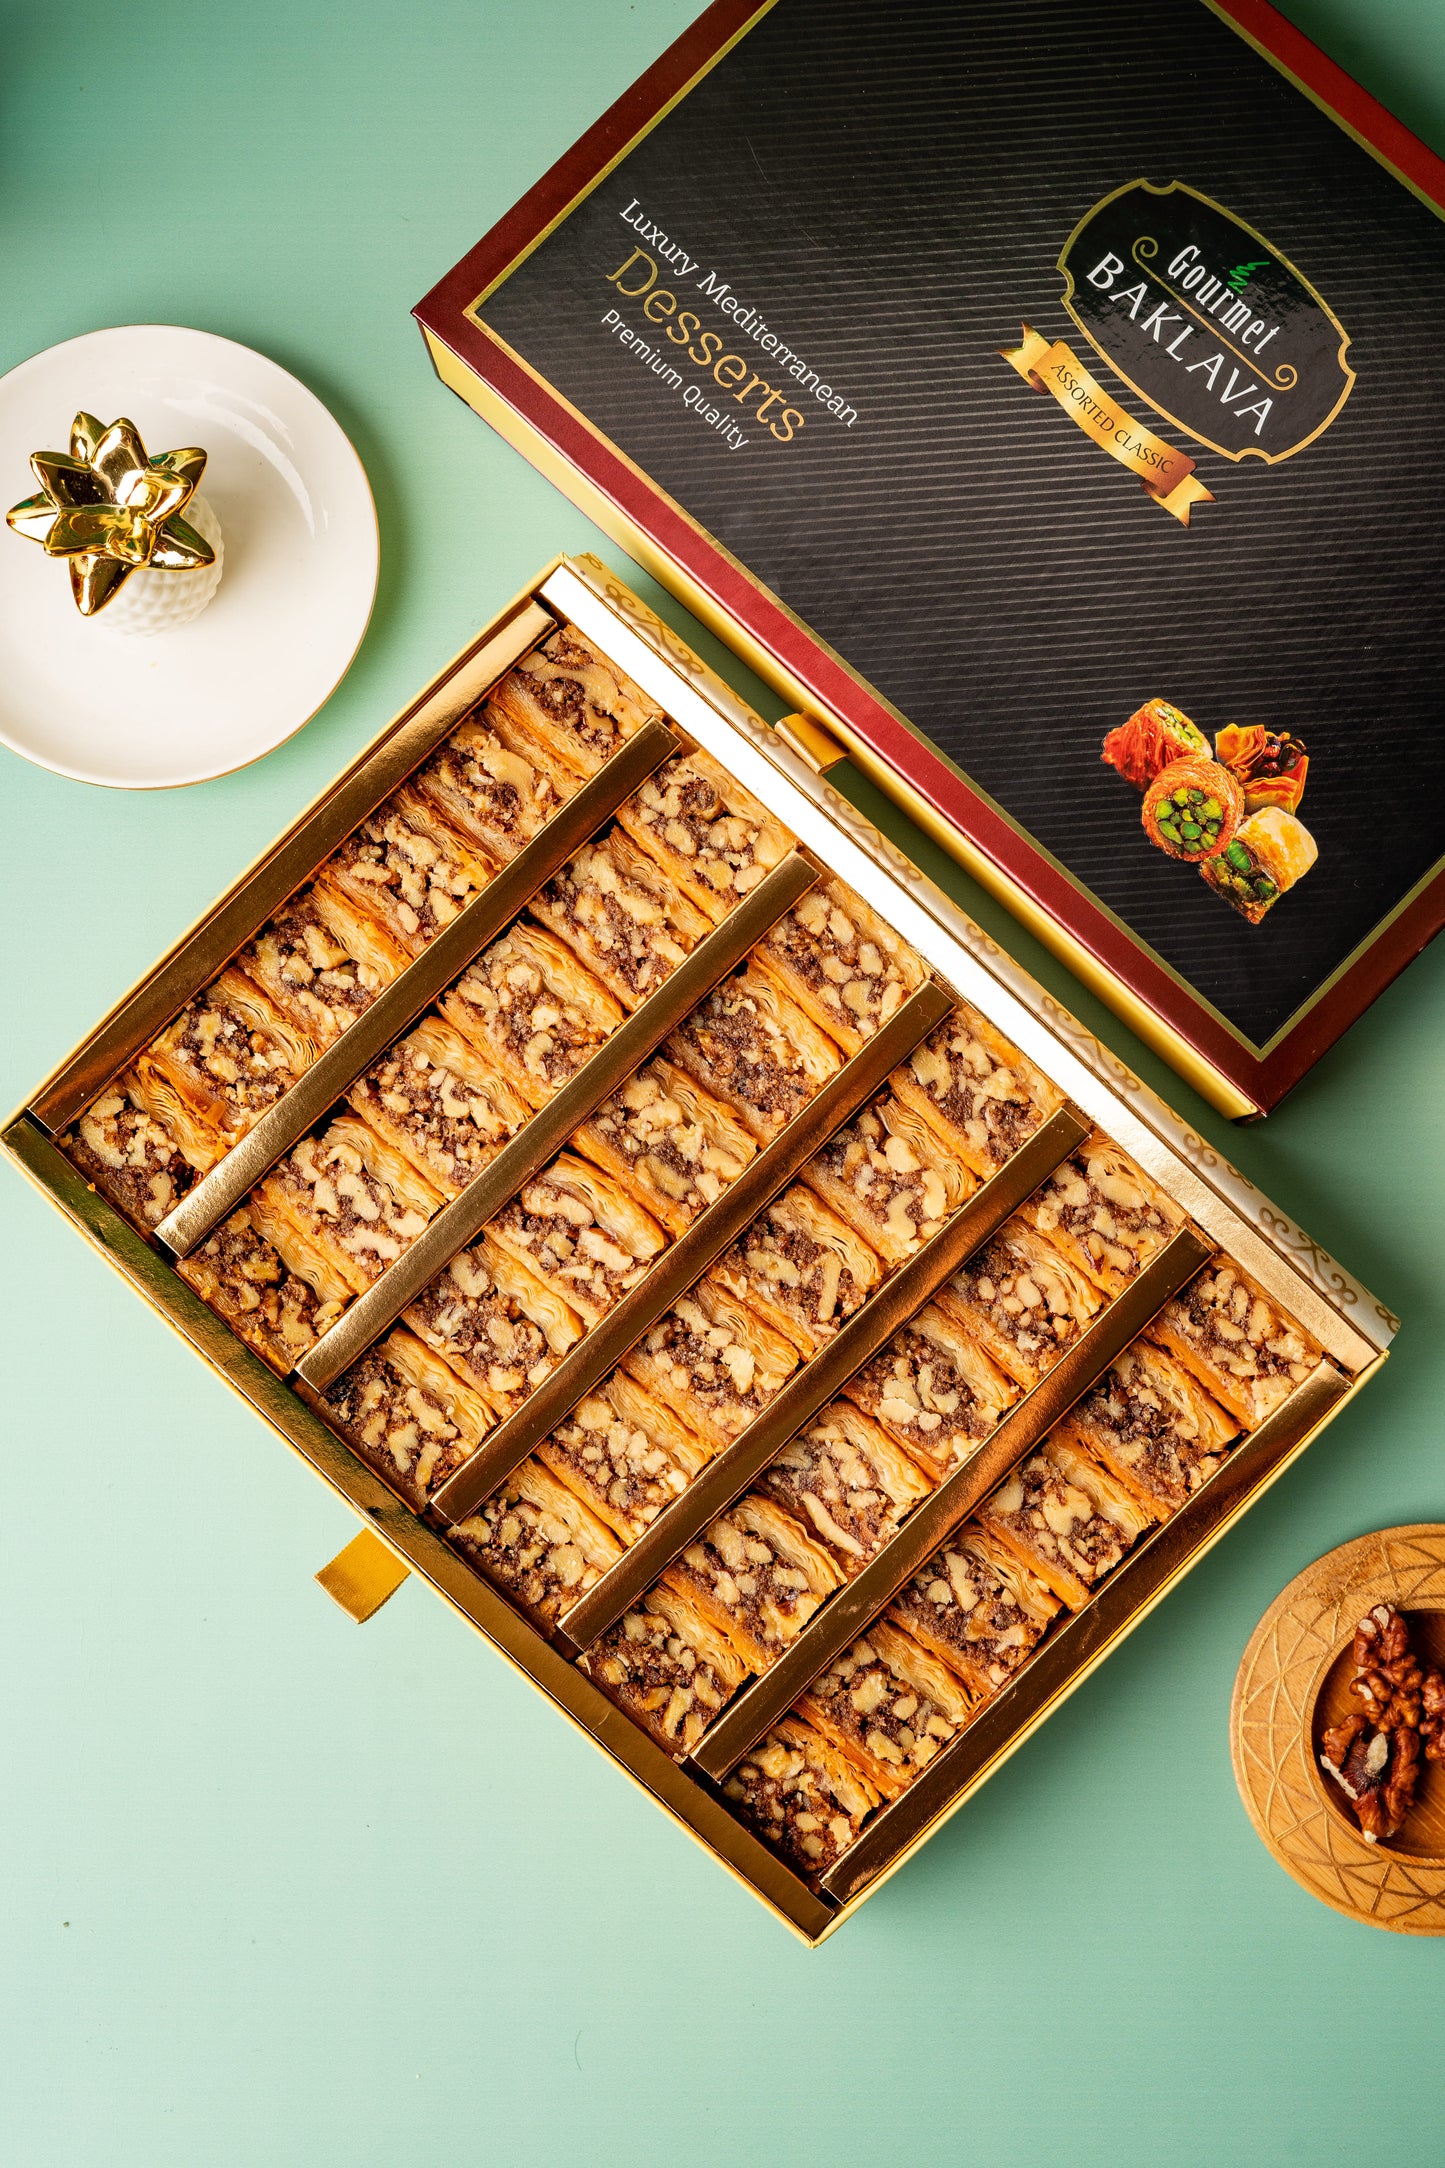 Gourmet Luxury Gift Box of Walnut Baklava